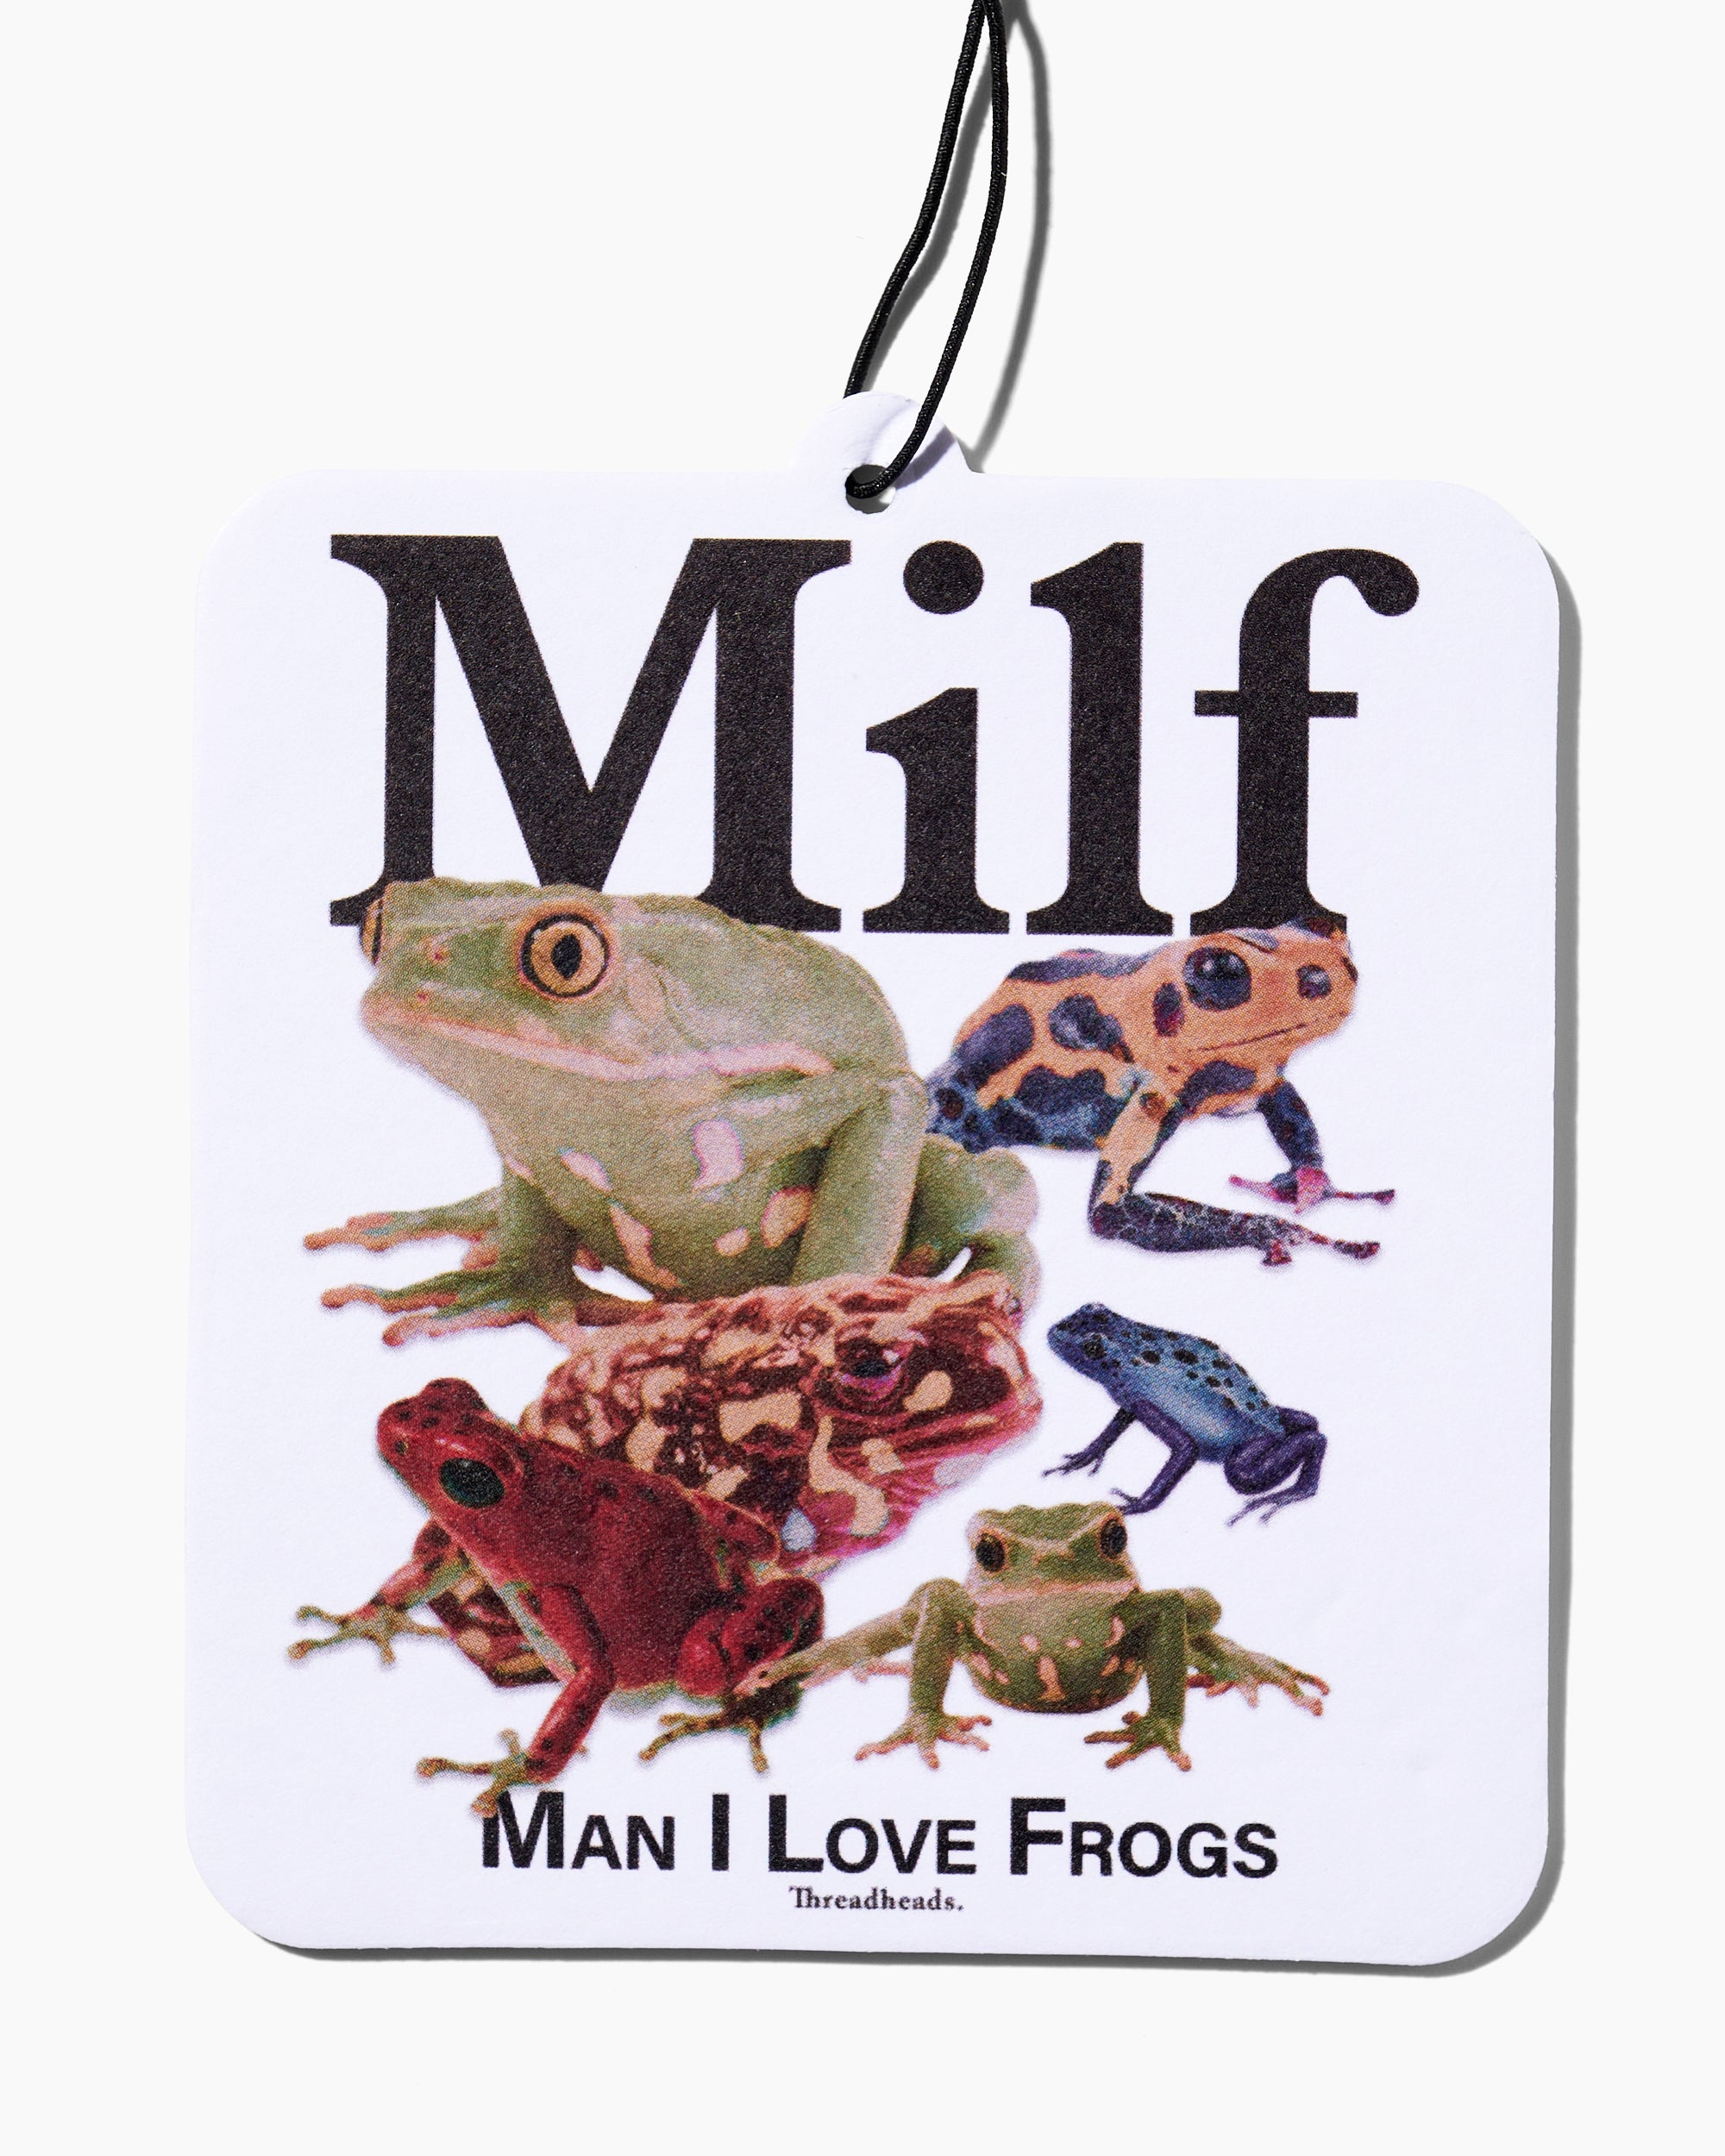 Man I Love Frogs Air Freshener